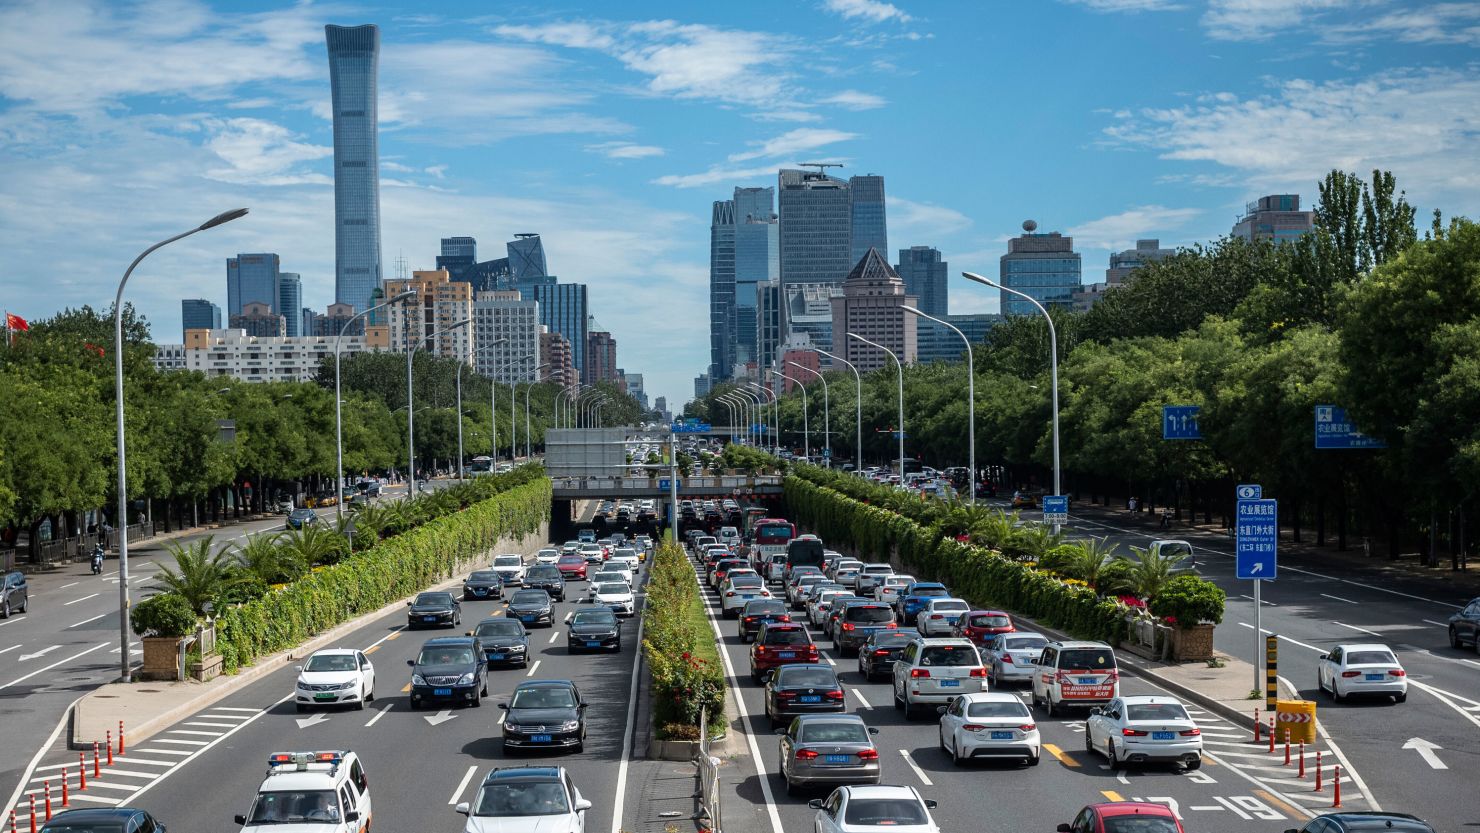 Downtown Beijing on July 30, 2021.